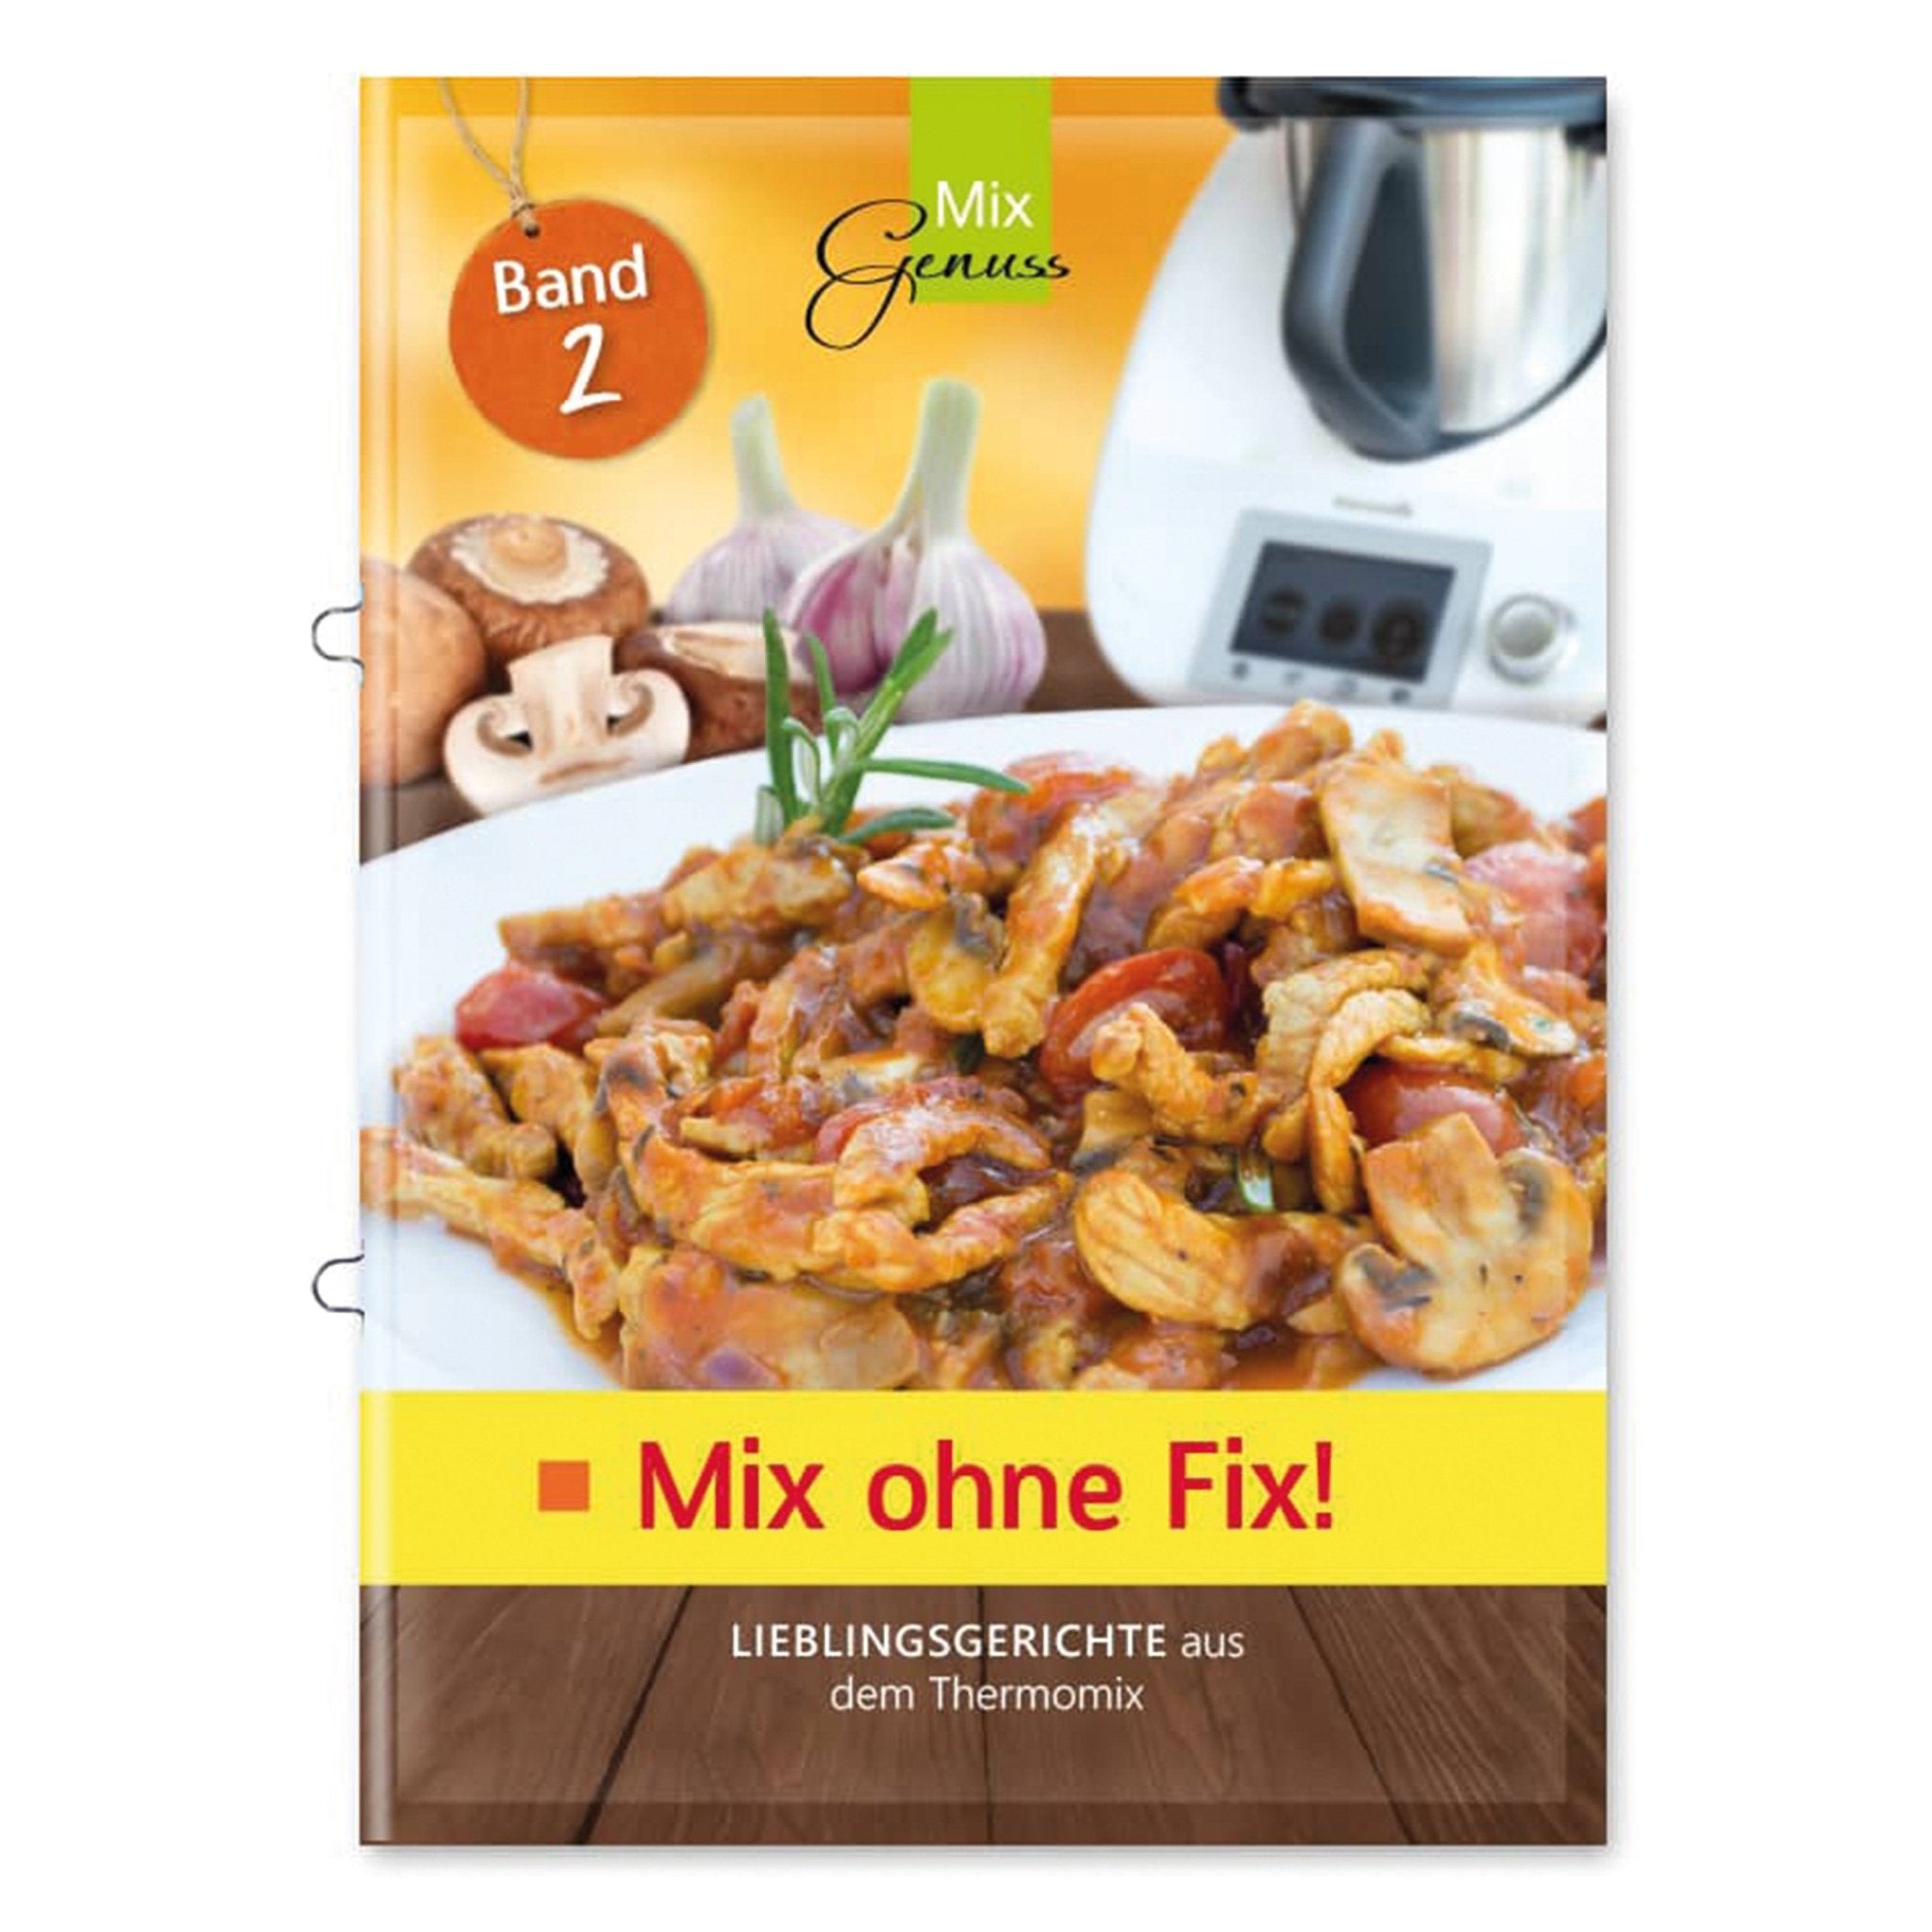 Mix ohne Fix! | Band 2 - Wundermix GmbH